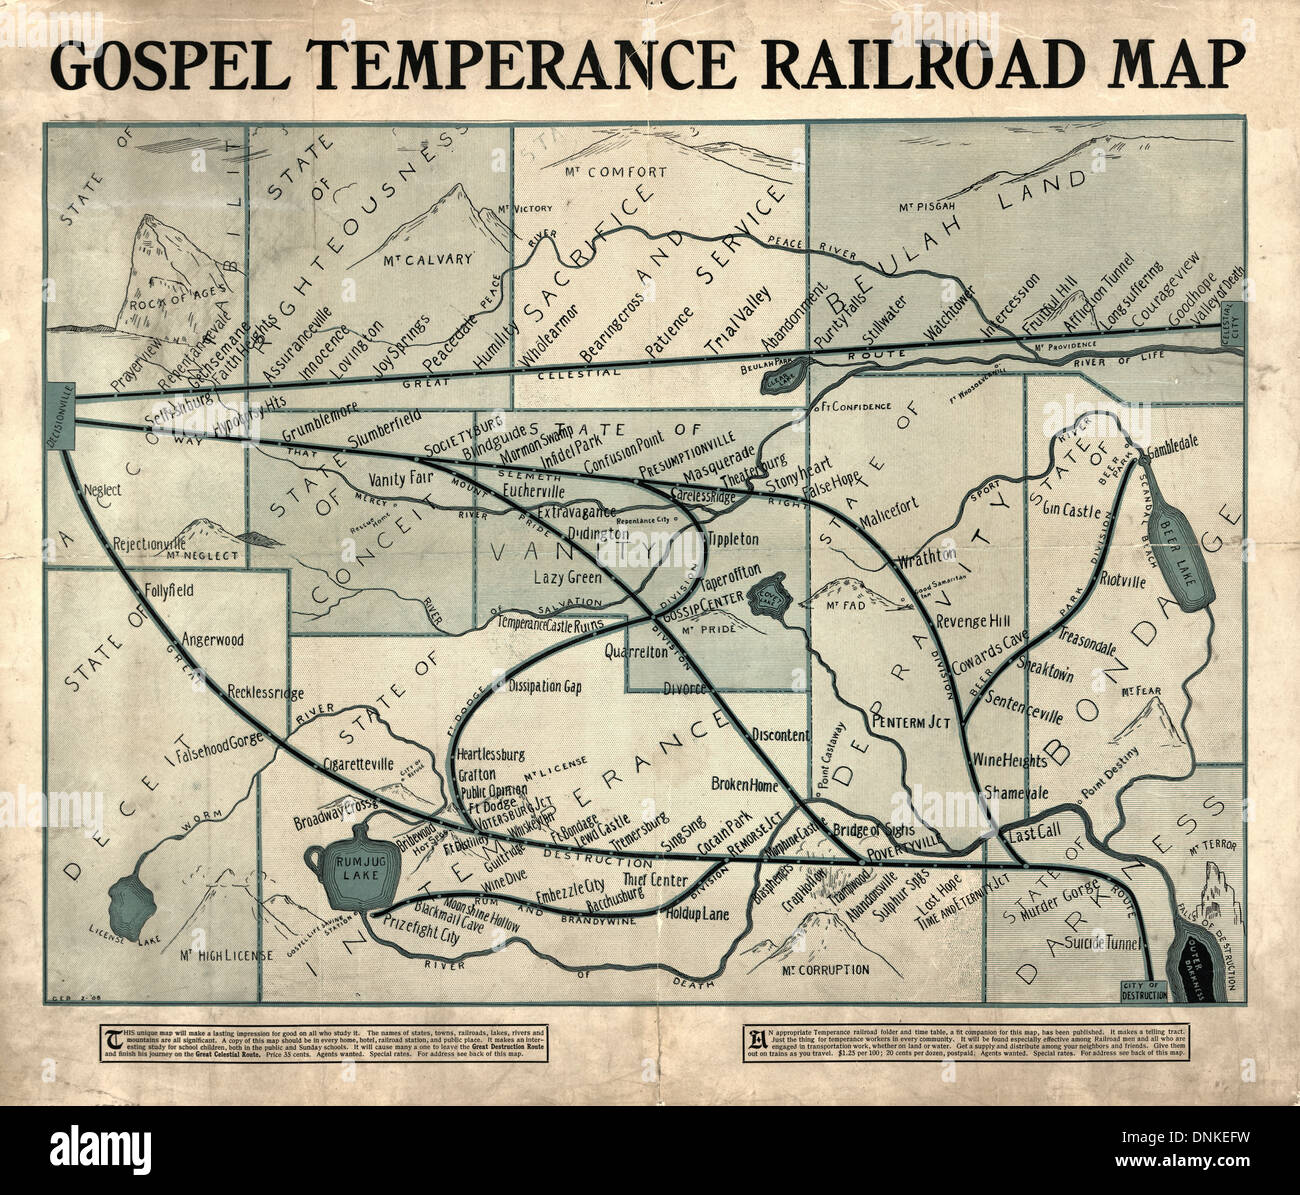 Gospel temperance railroad map. 1908 Stock Photo